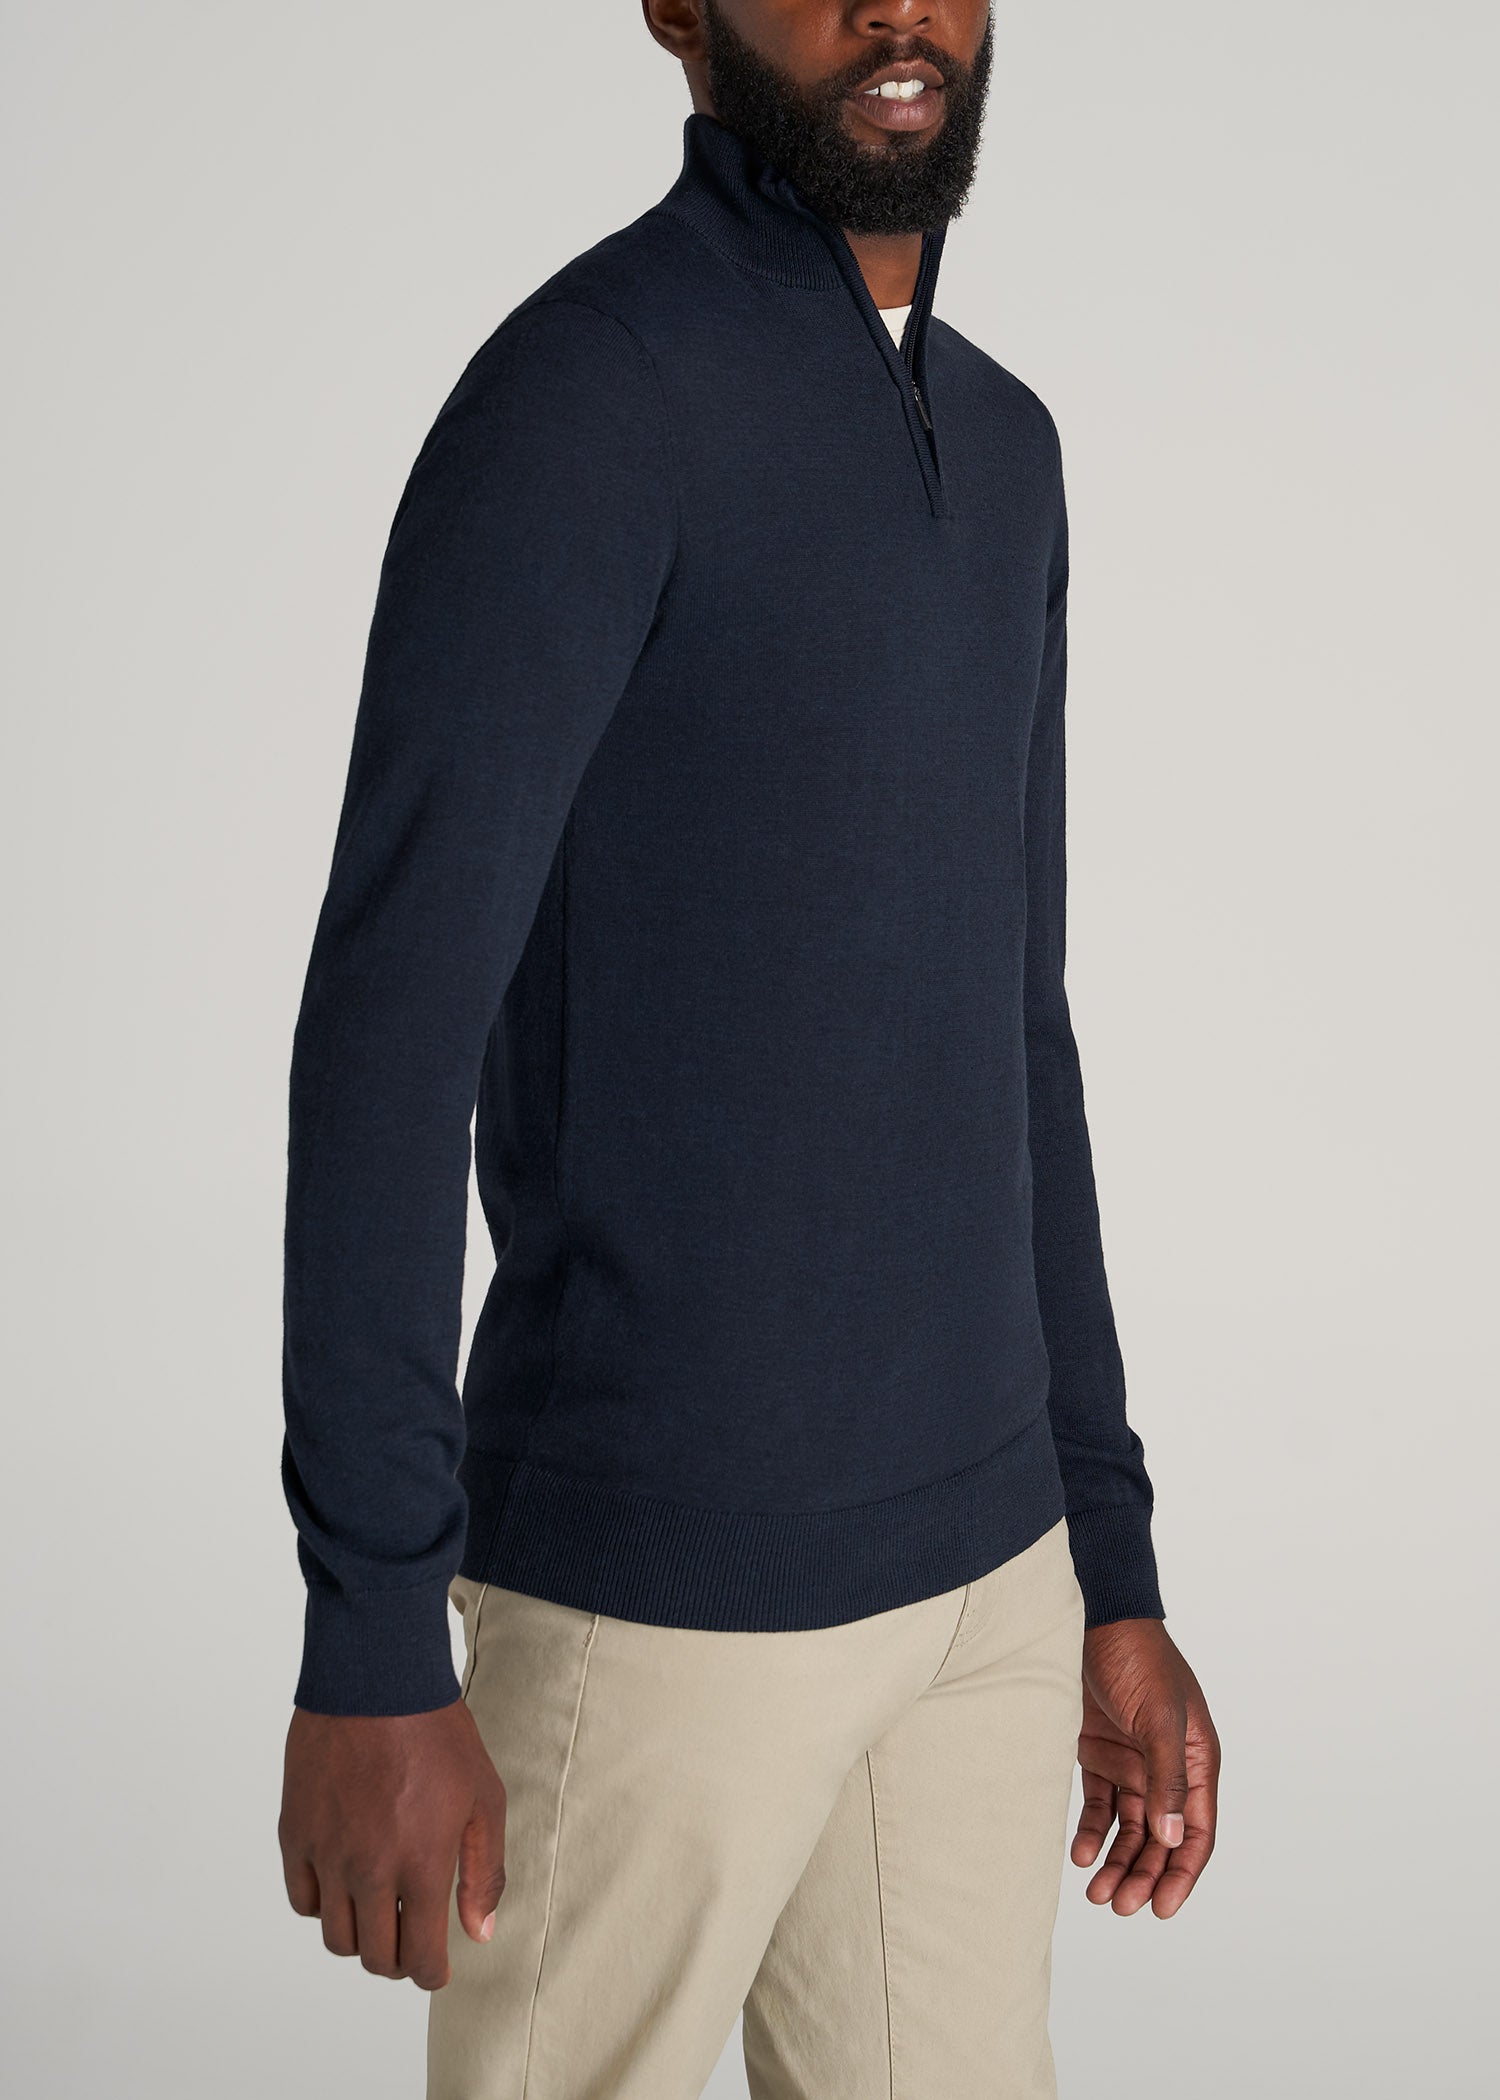 Everyday Quarter-Zip Tall Men's Sweater in Patriot Blue